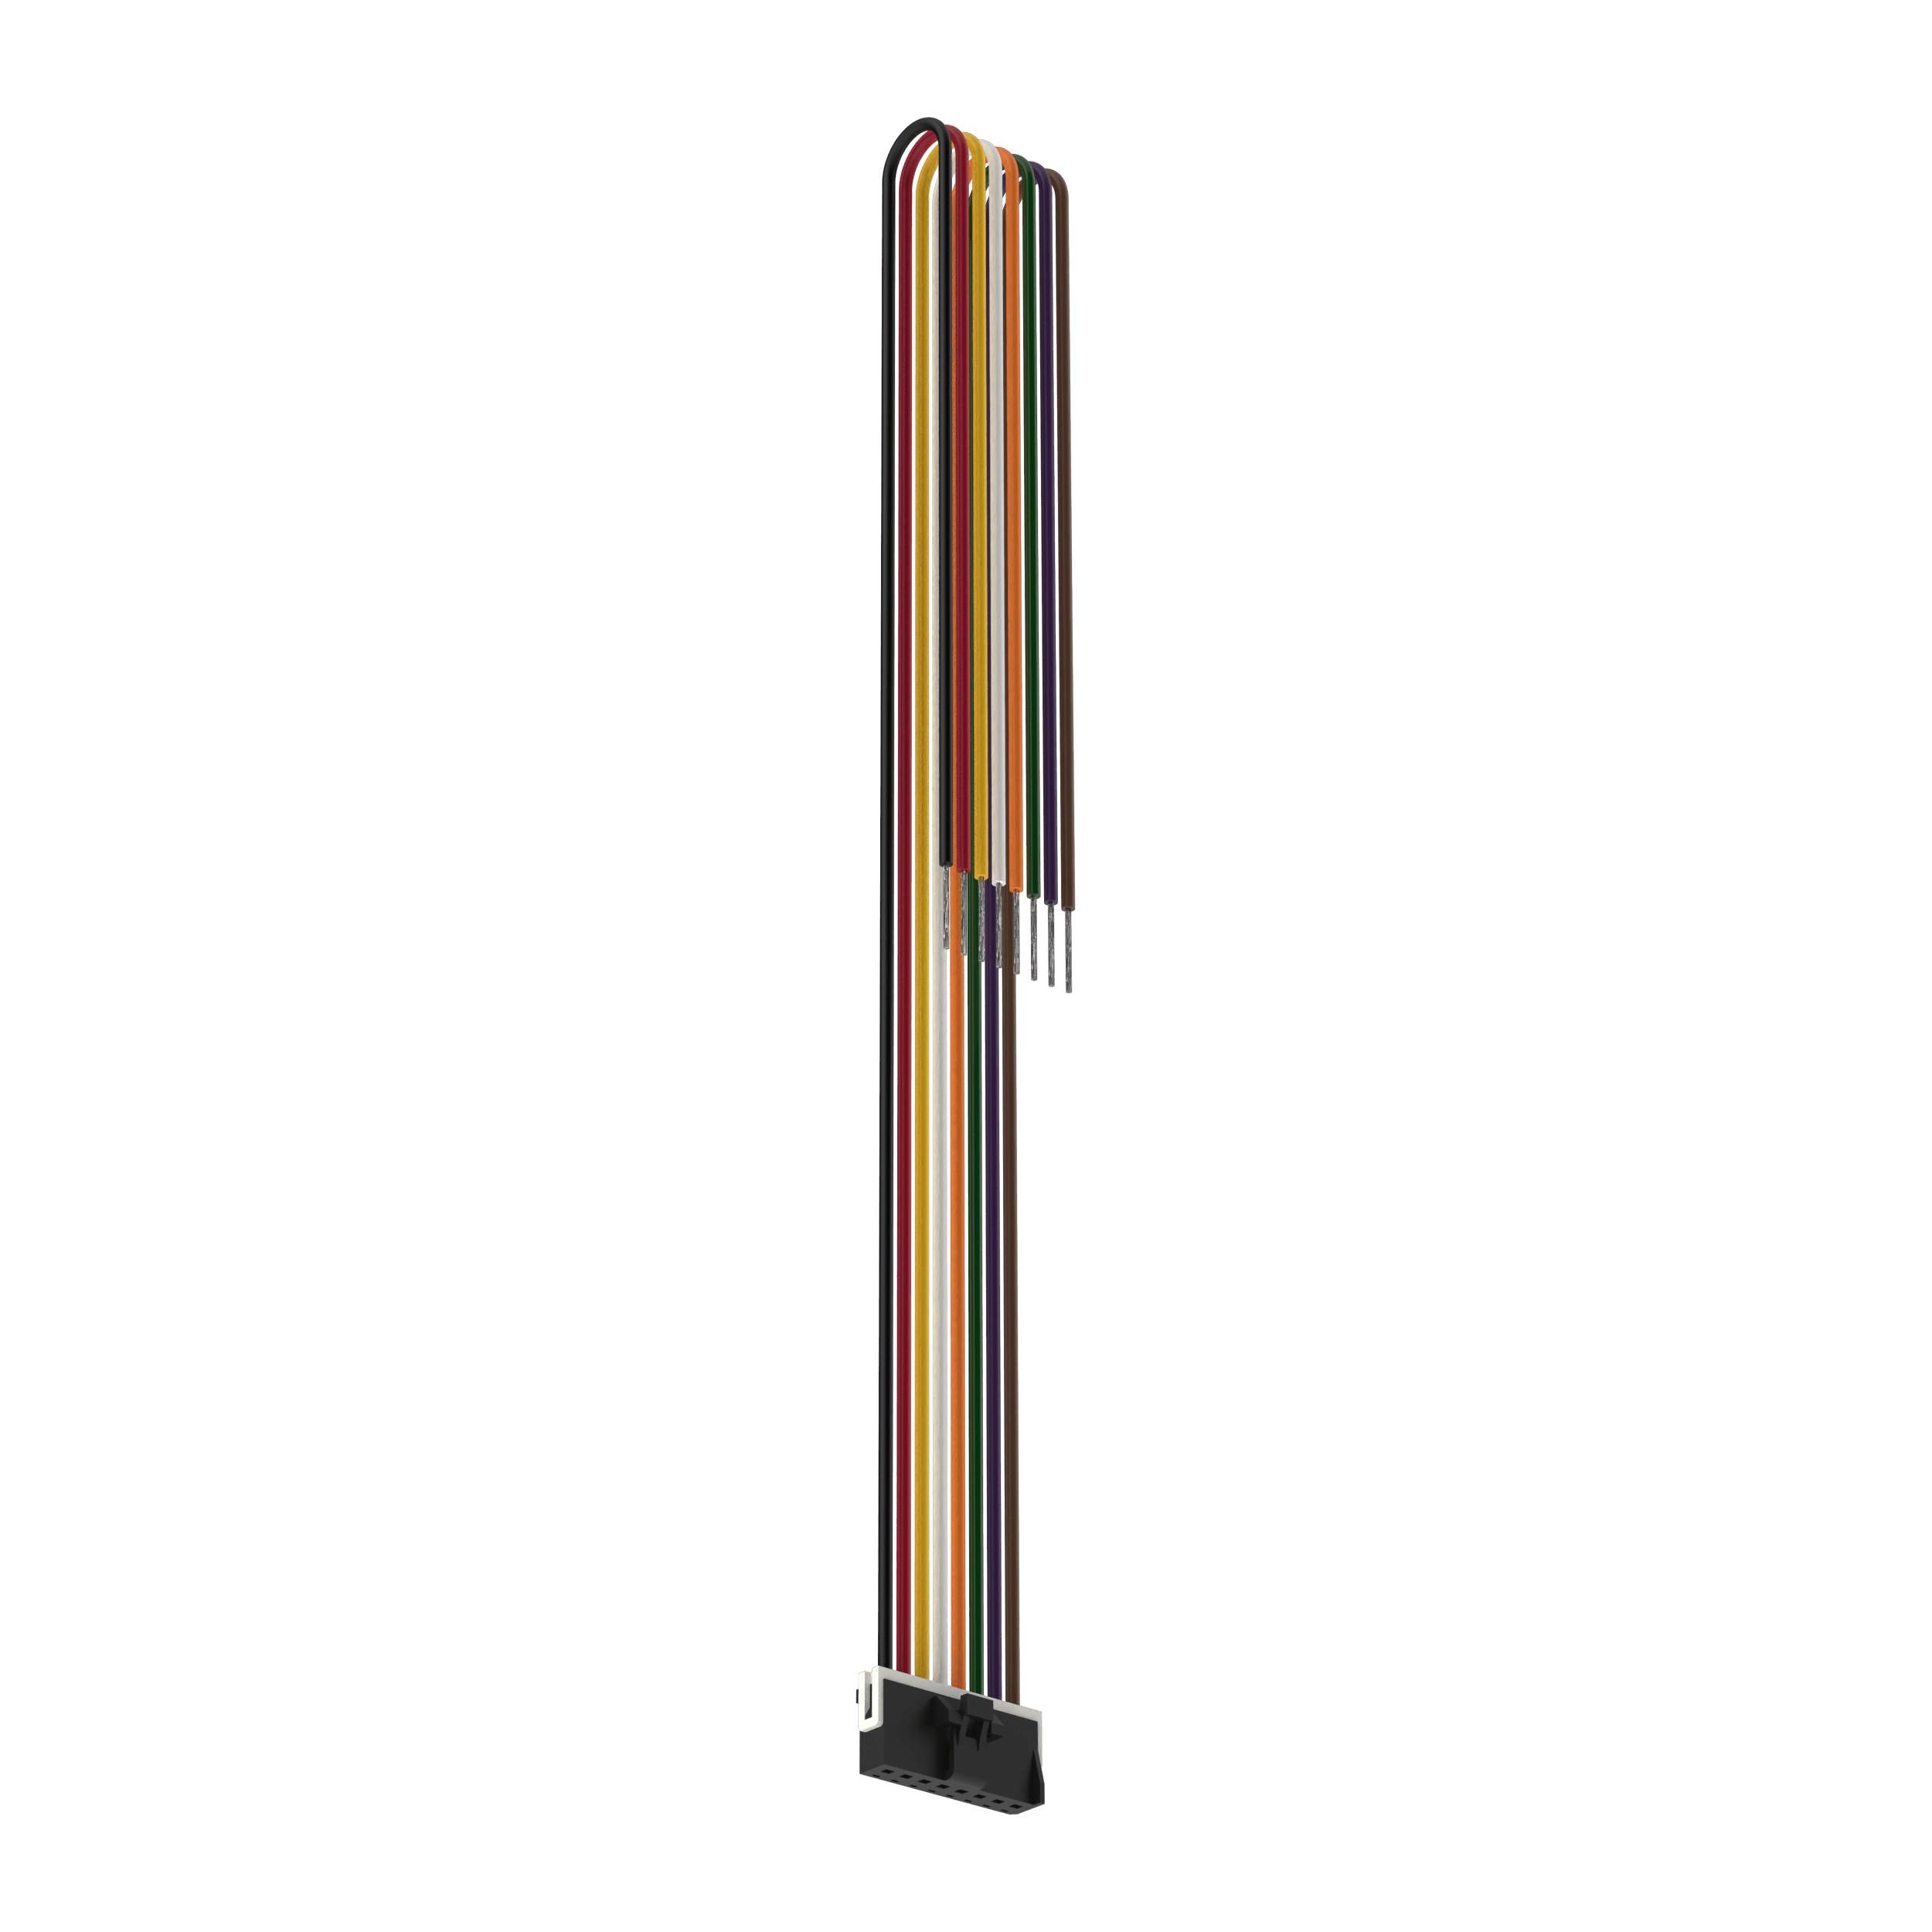 Image of W960 Wiring Harness | W960 Wiring Harness